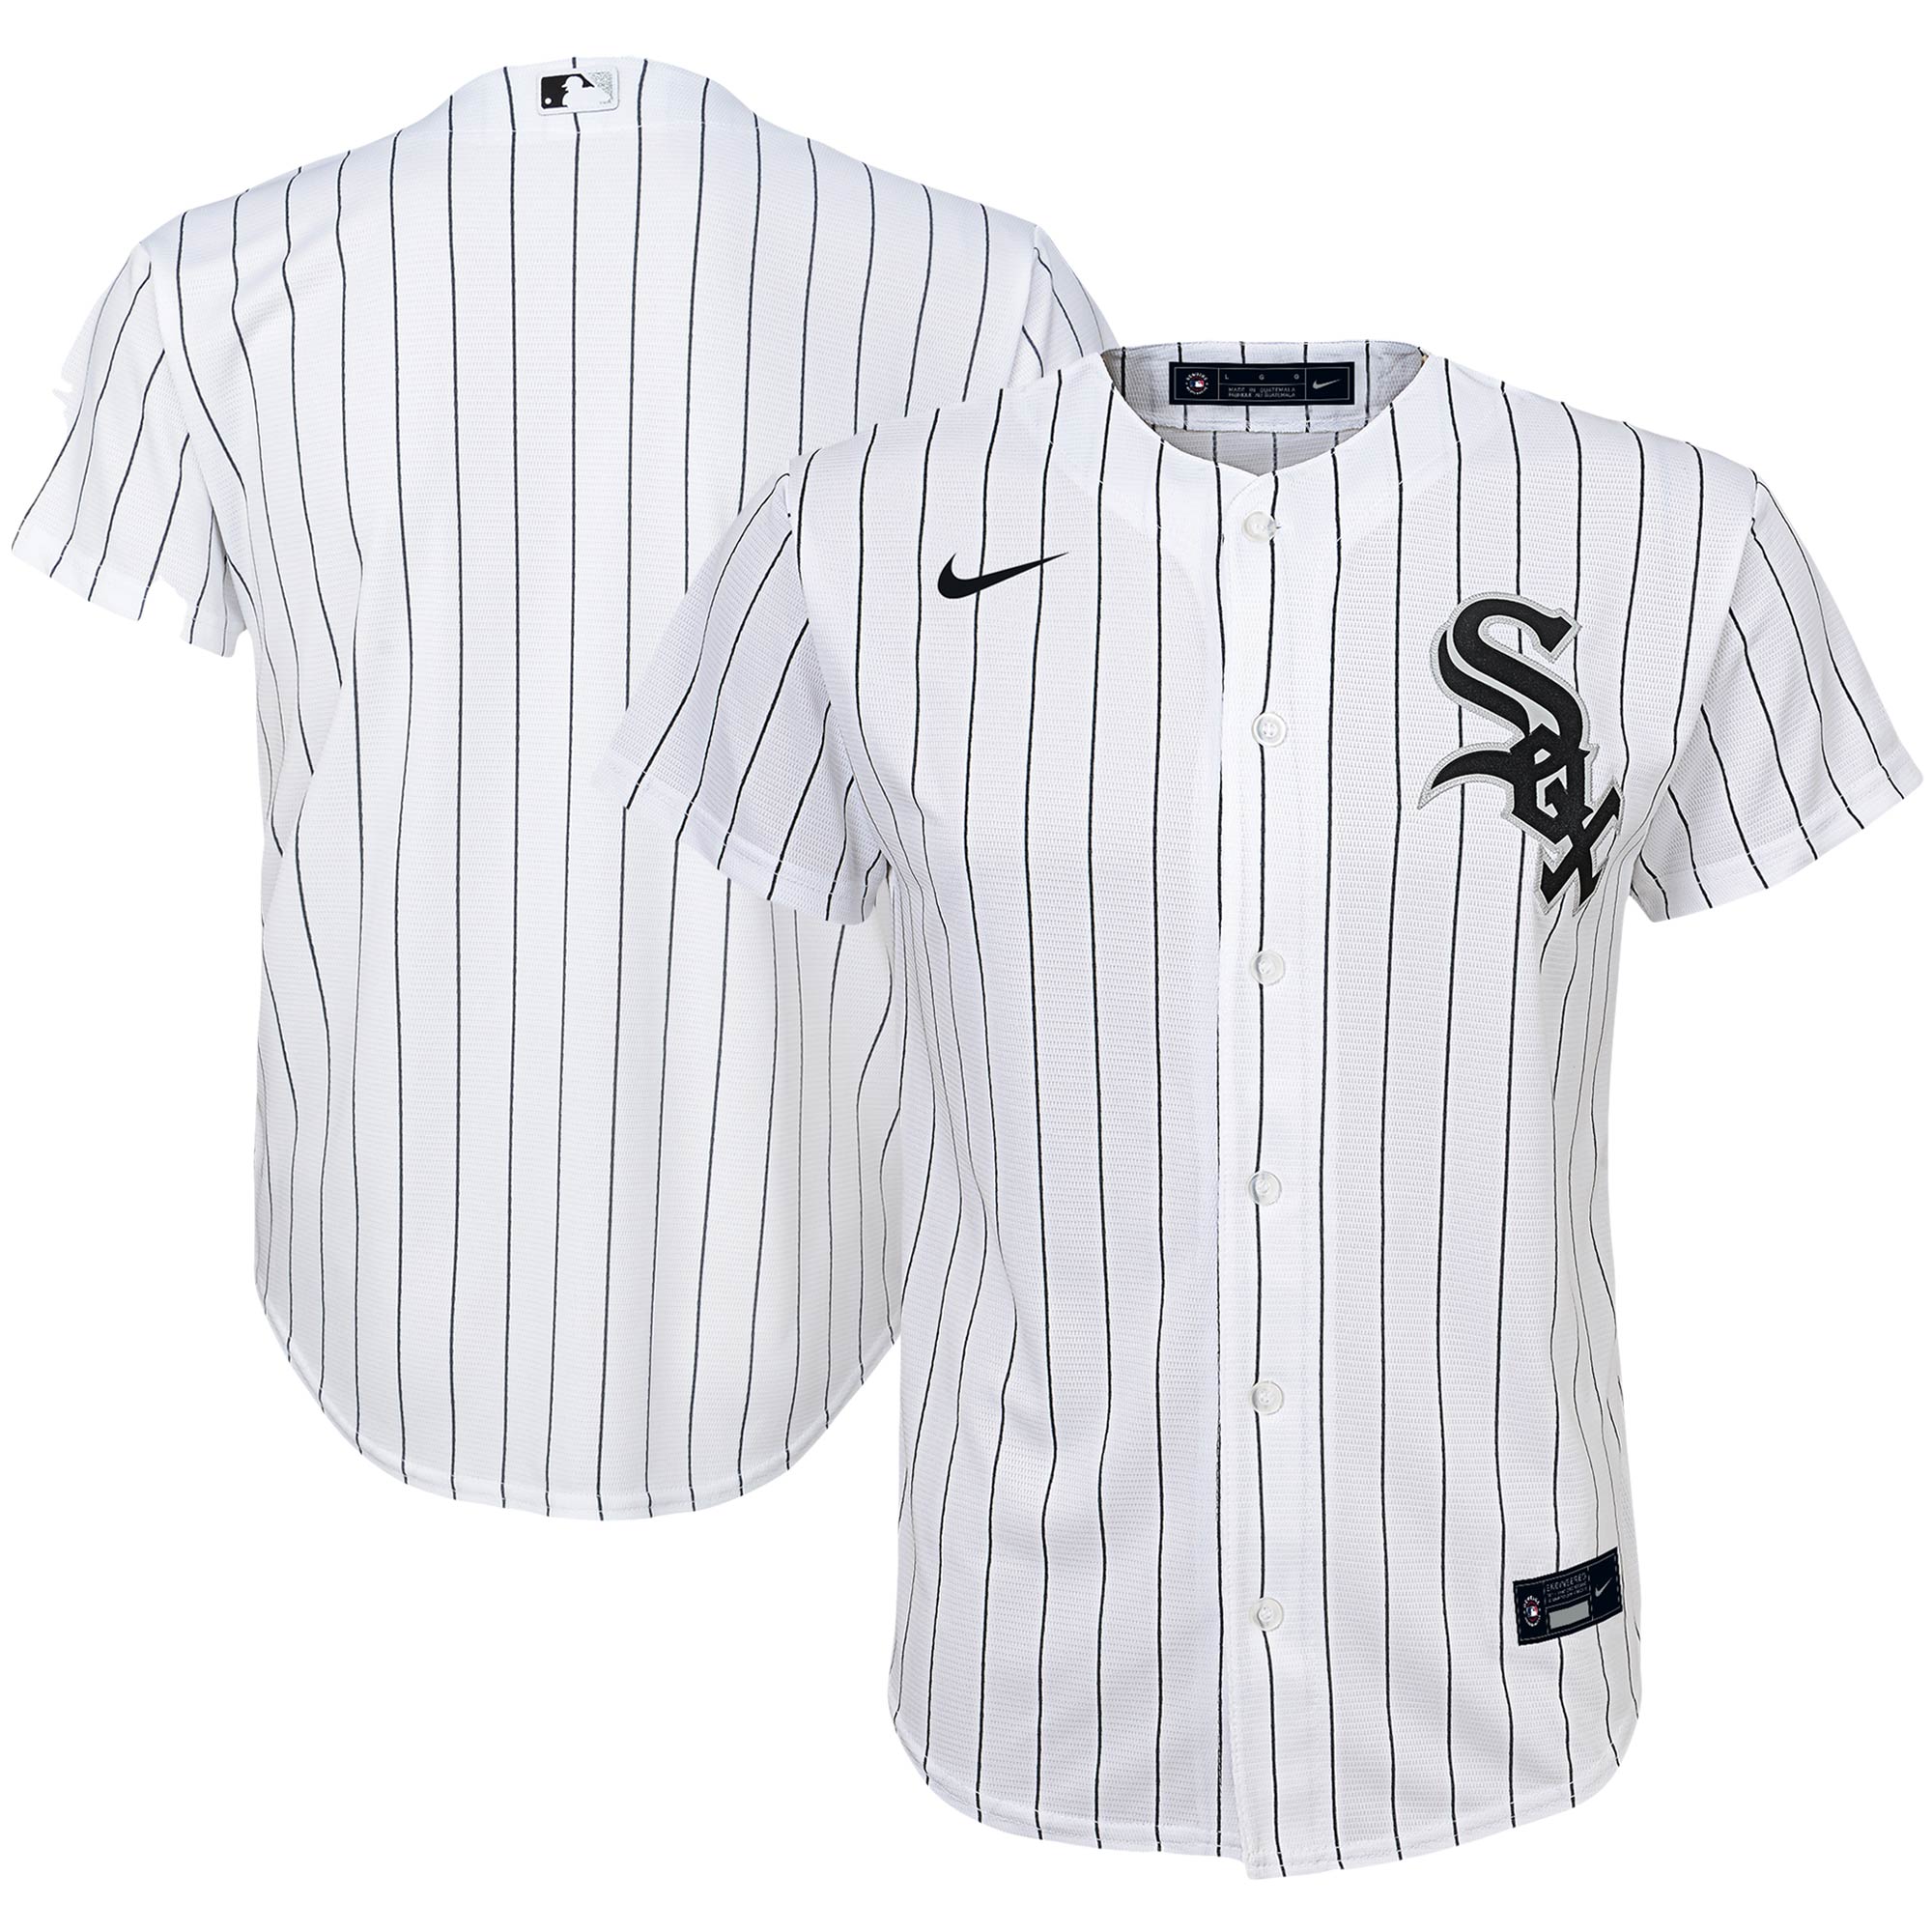 Official Chicago White Sox Jerseys, White Sox Baseball Jerseys, Uniforms